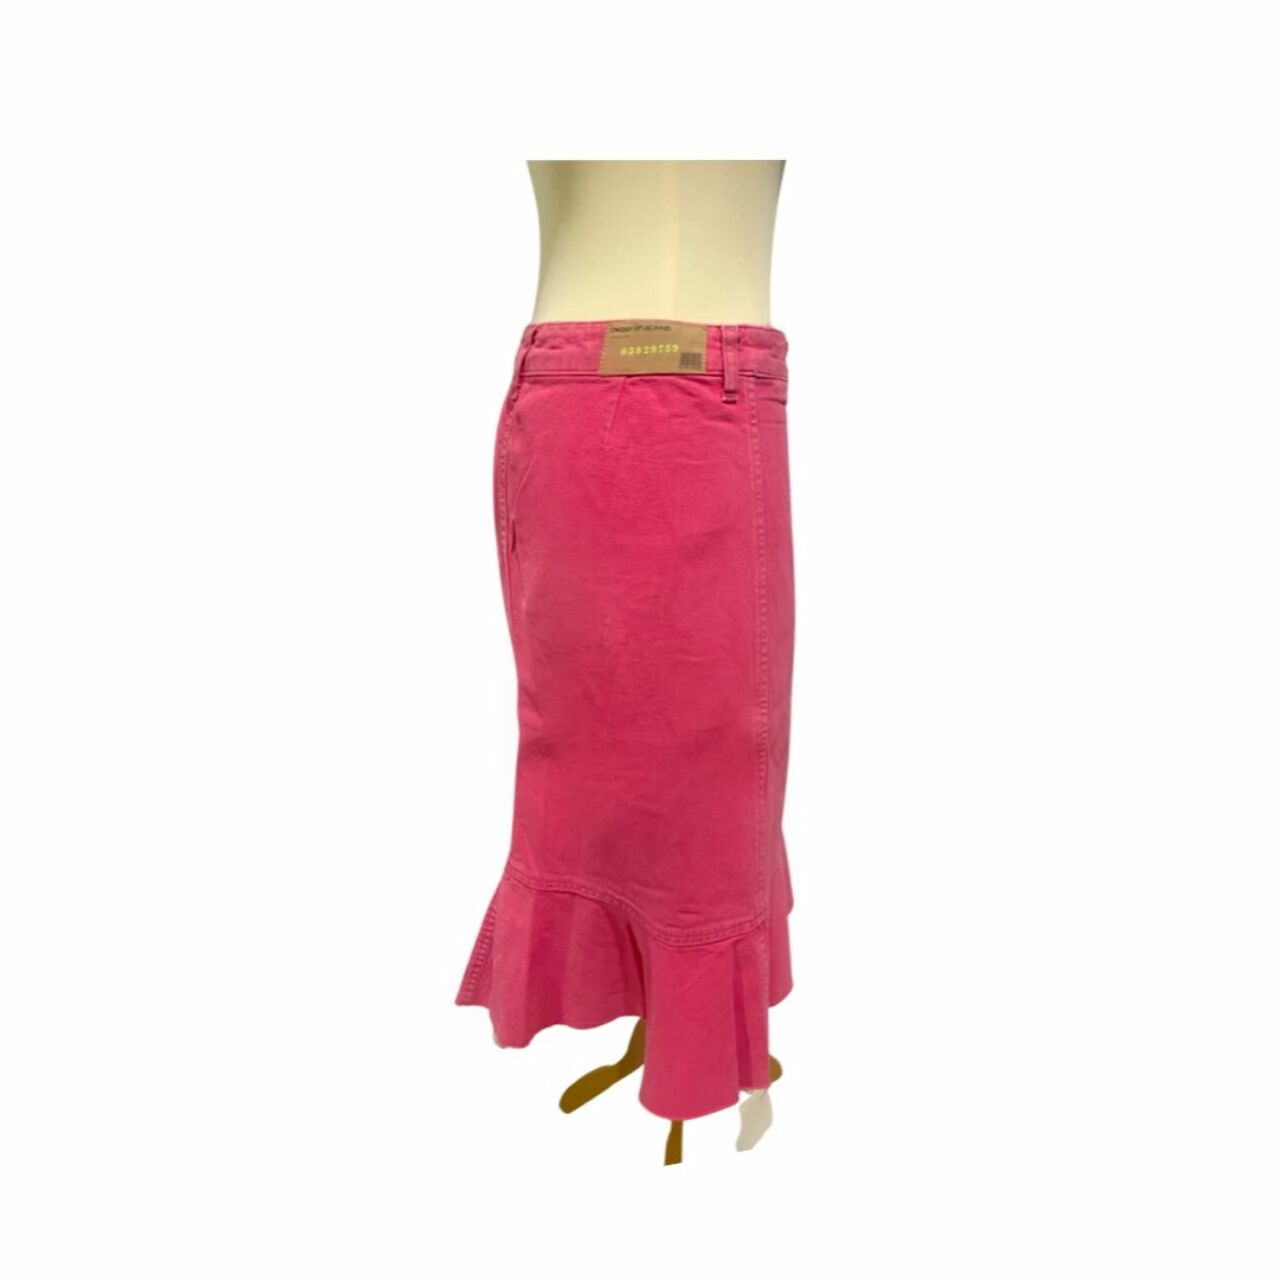 DKNY Jeans Pink Midi Skirt